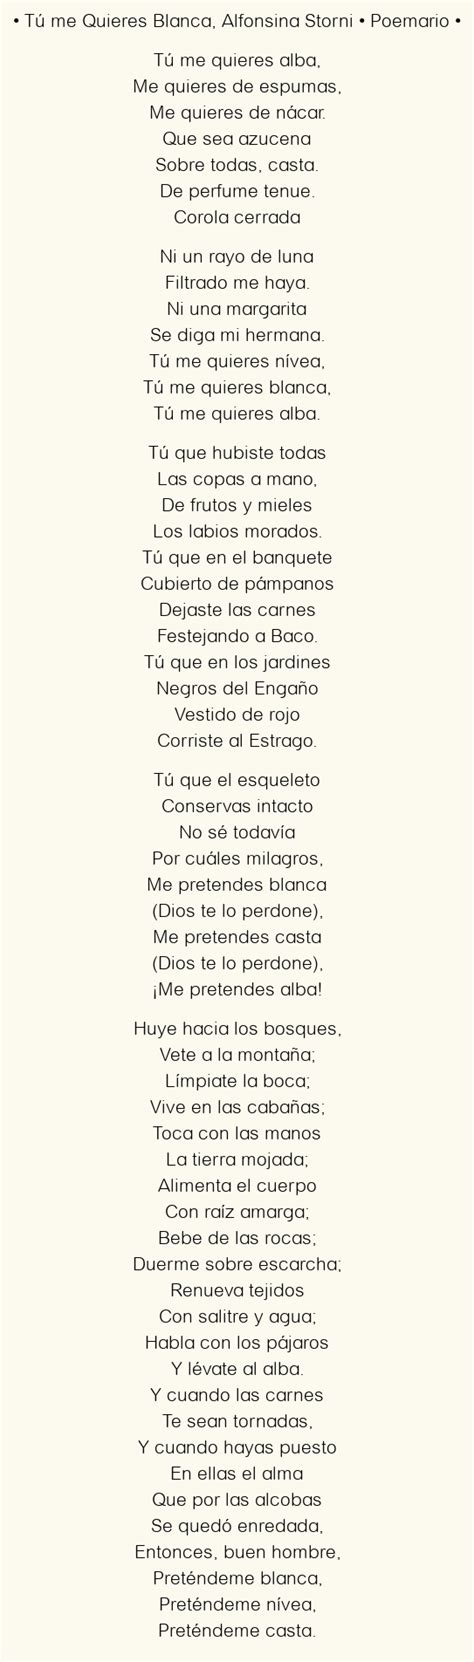 Tú Me Quieres Blanca Alfonsina Storni Poema Original